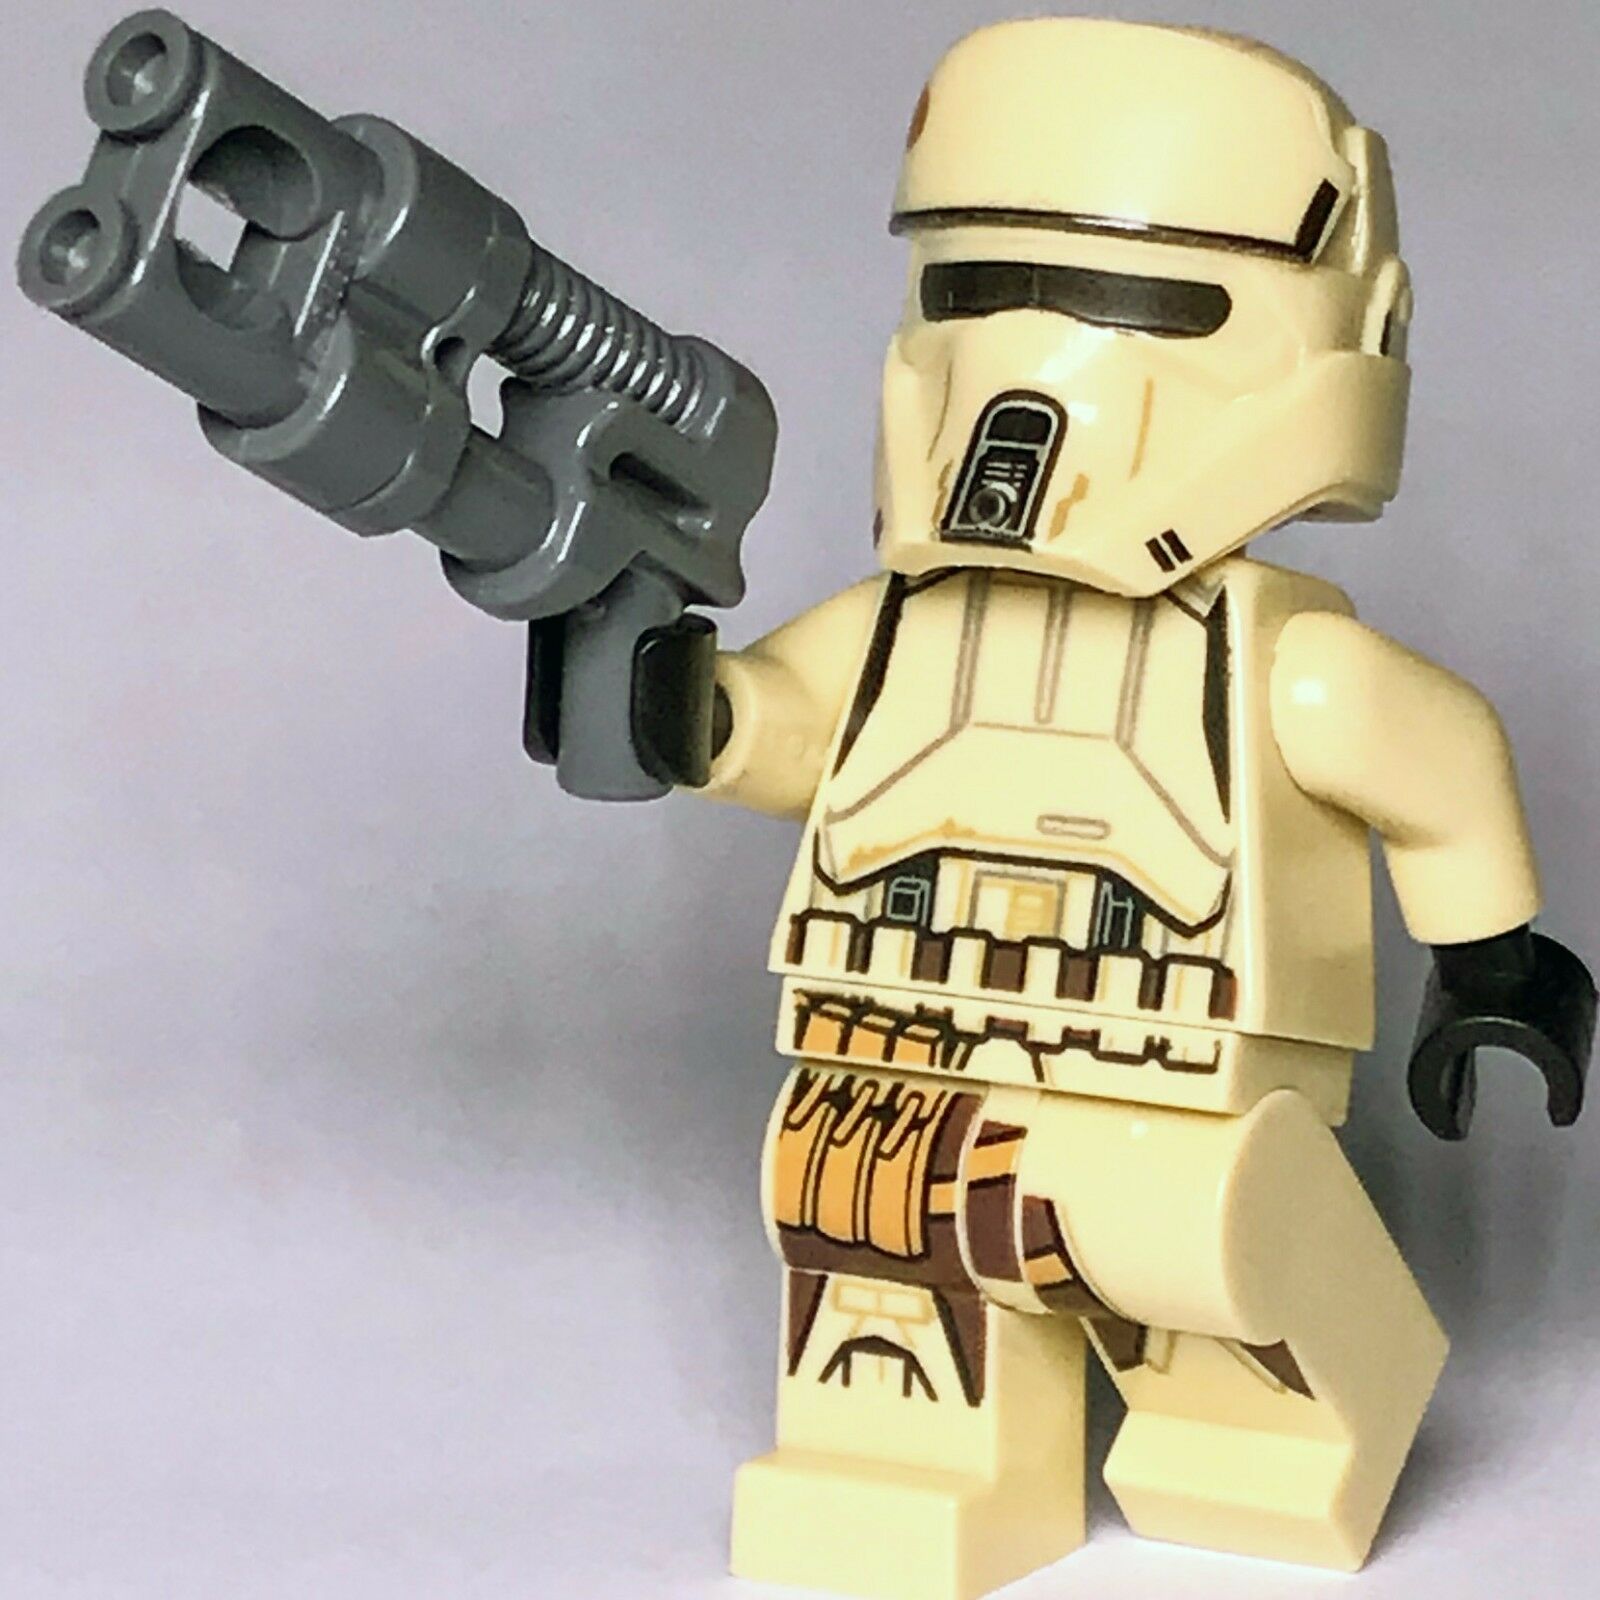 STAR WARS lego IMPERIAL SCARIF shoretrooper STORMTROOPER rogue one GENUINE 75171 - Bricks & Figures